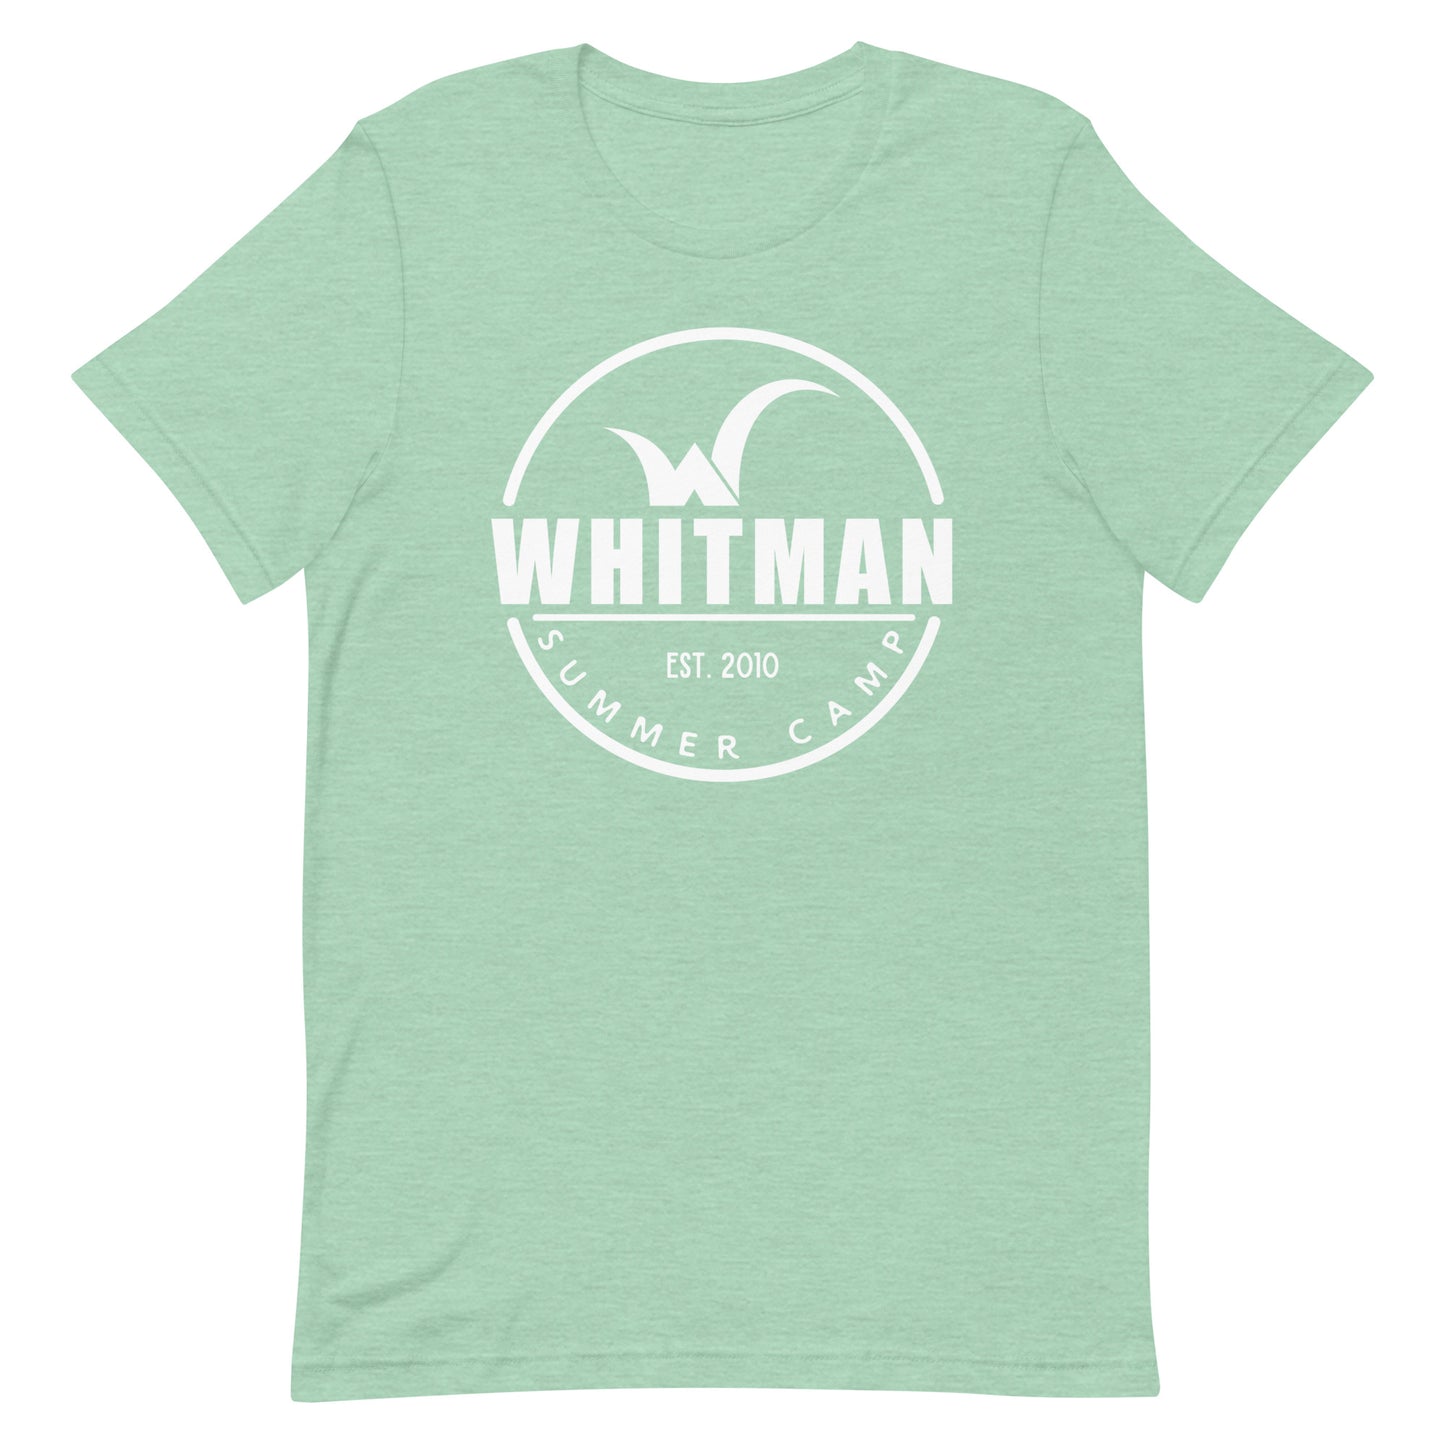 Whitman Summer Camp Short Sleeve T-shirt (Adult Sizes)